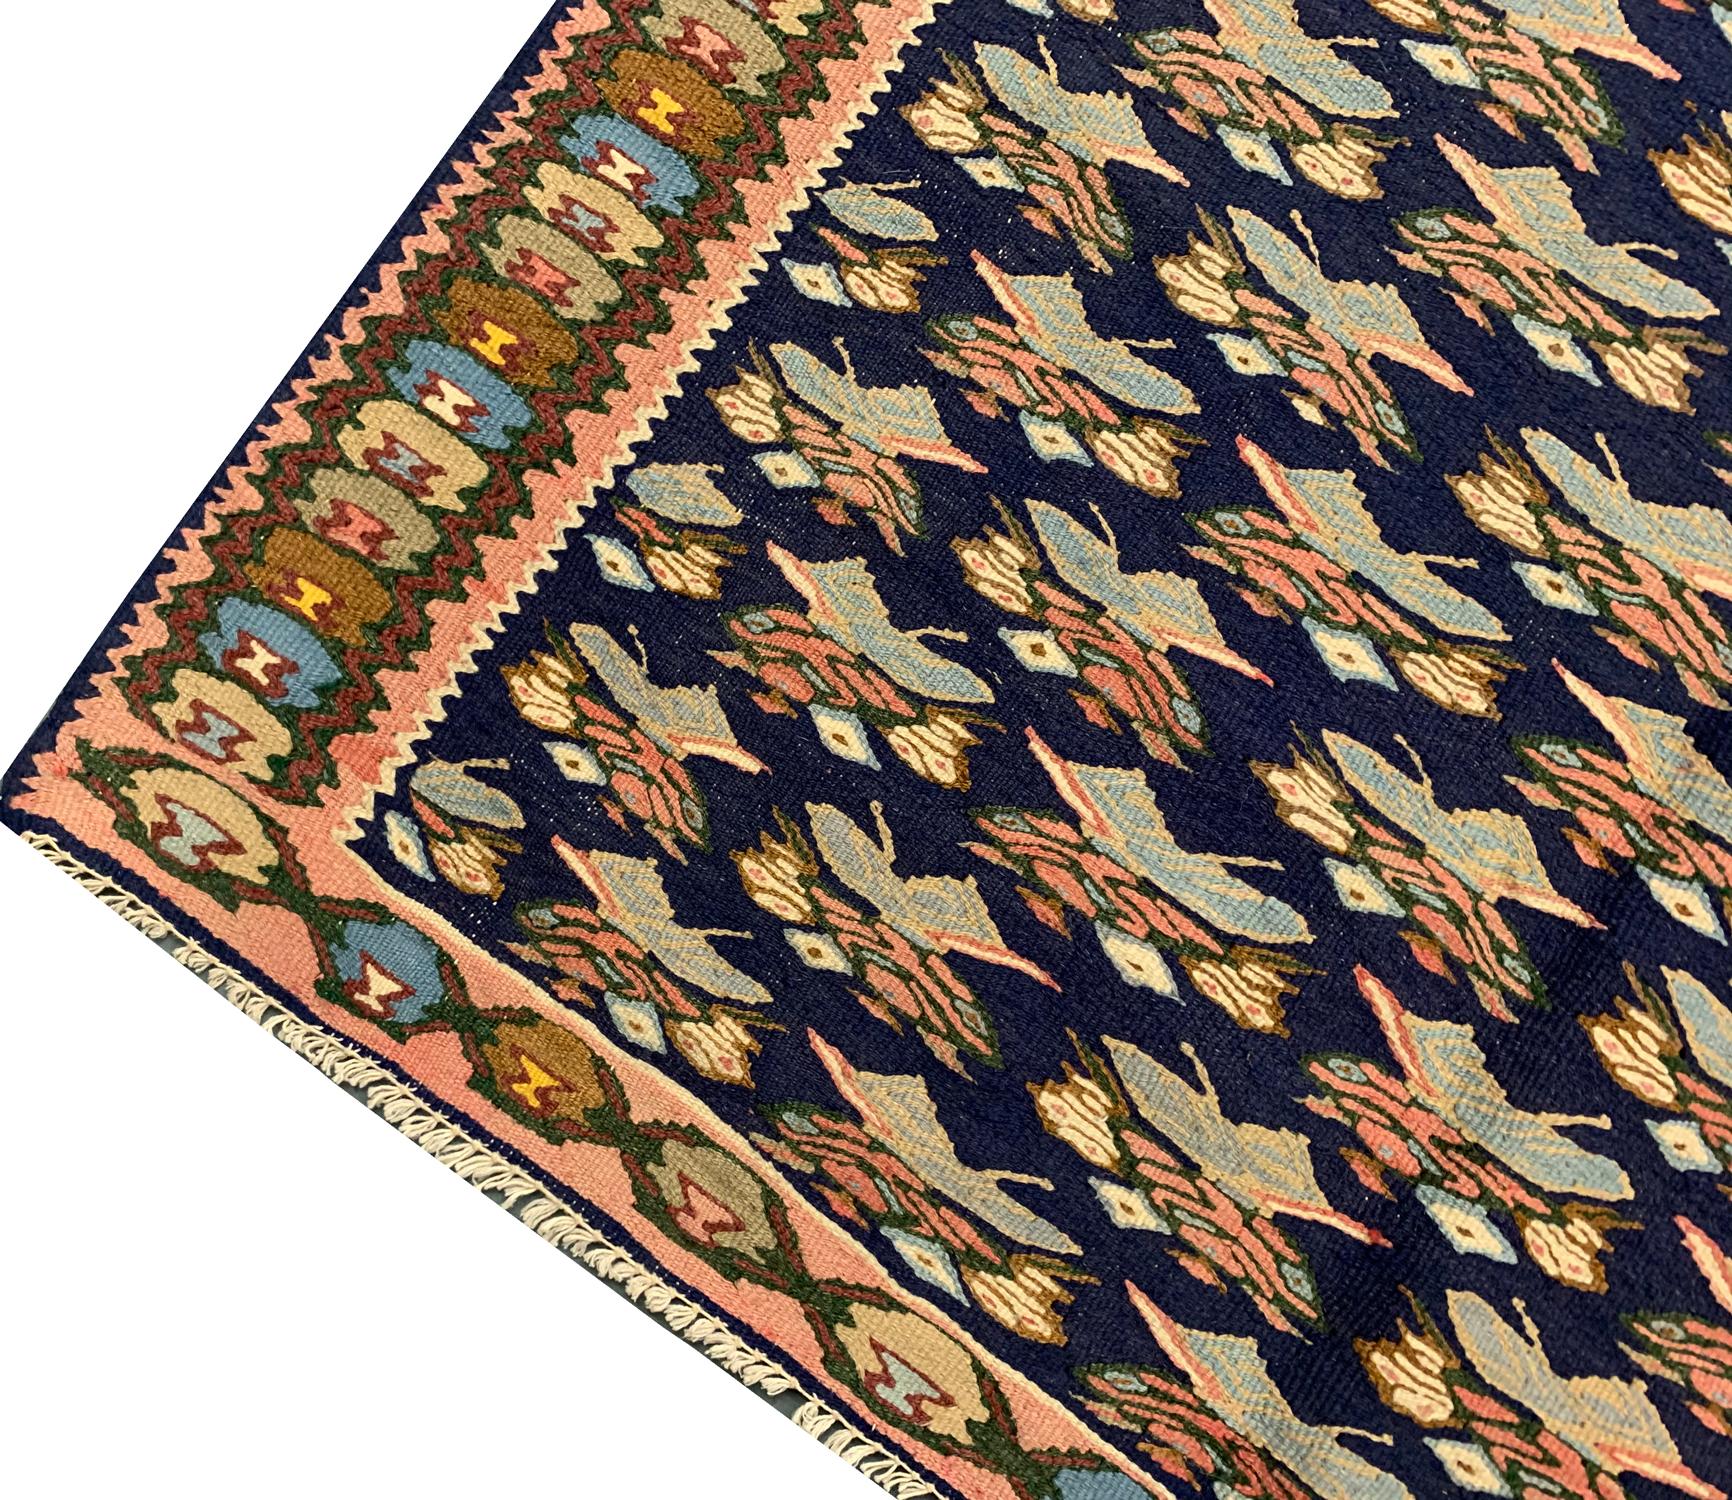 Hand-Woven Antique Rugs Traditional Kilim Rug Kurdish Caucasian Kilims Carpet For Sale